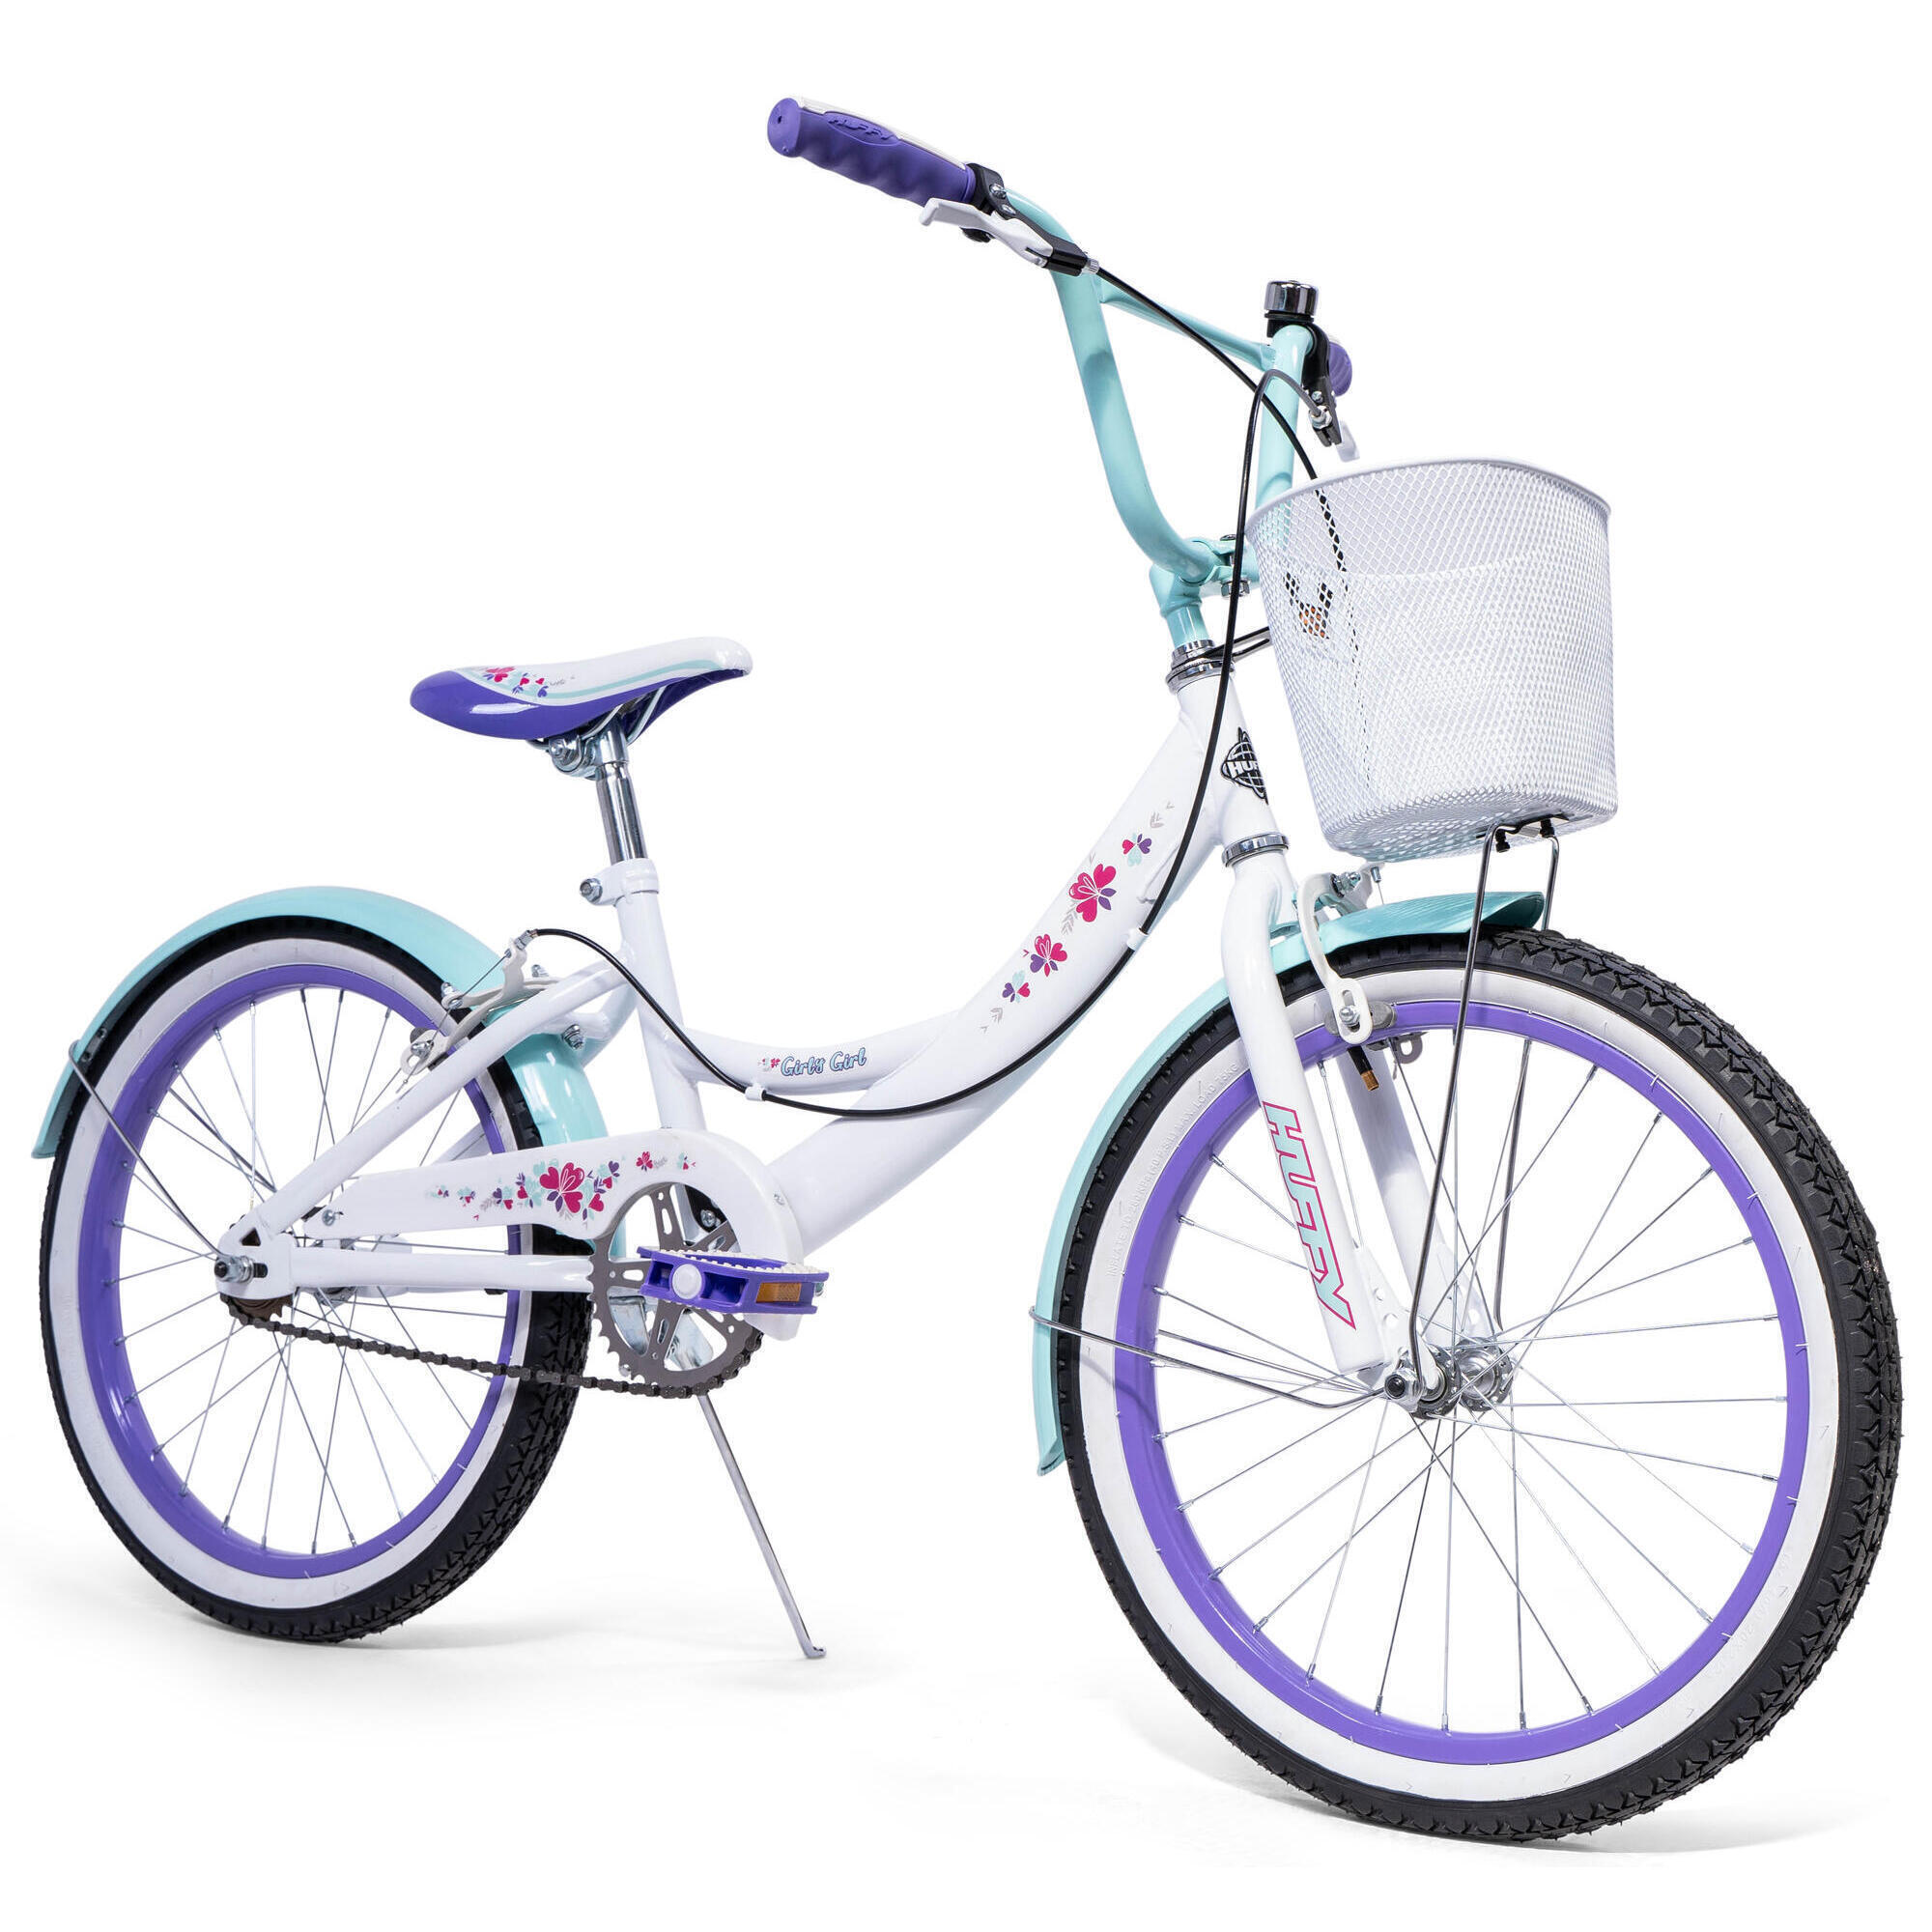 HUFFY Huffy Girly Girl 20" Kids Bike - White + Purple for Girls aged 6 - 9yrs